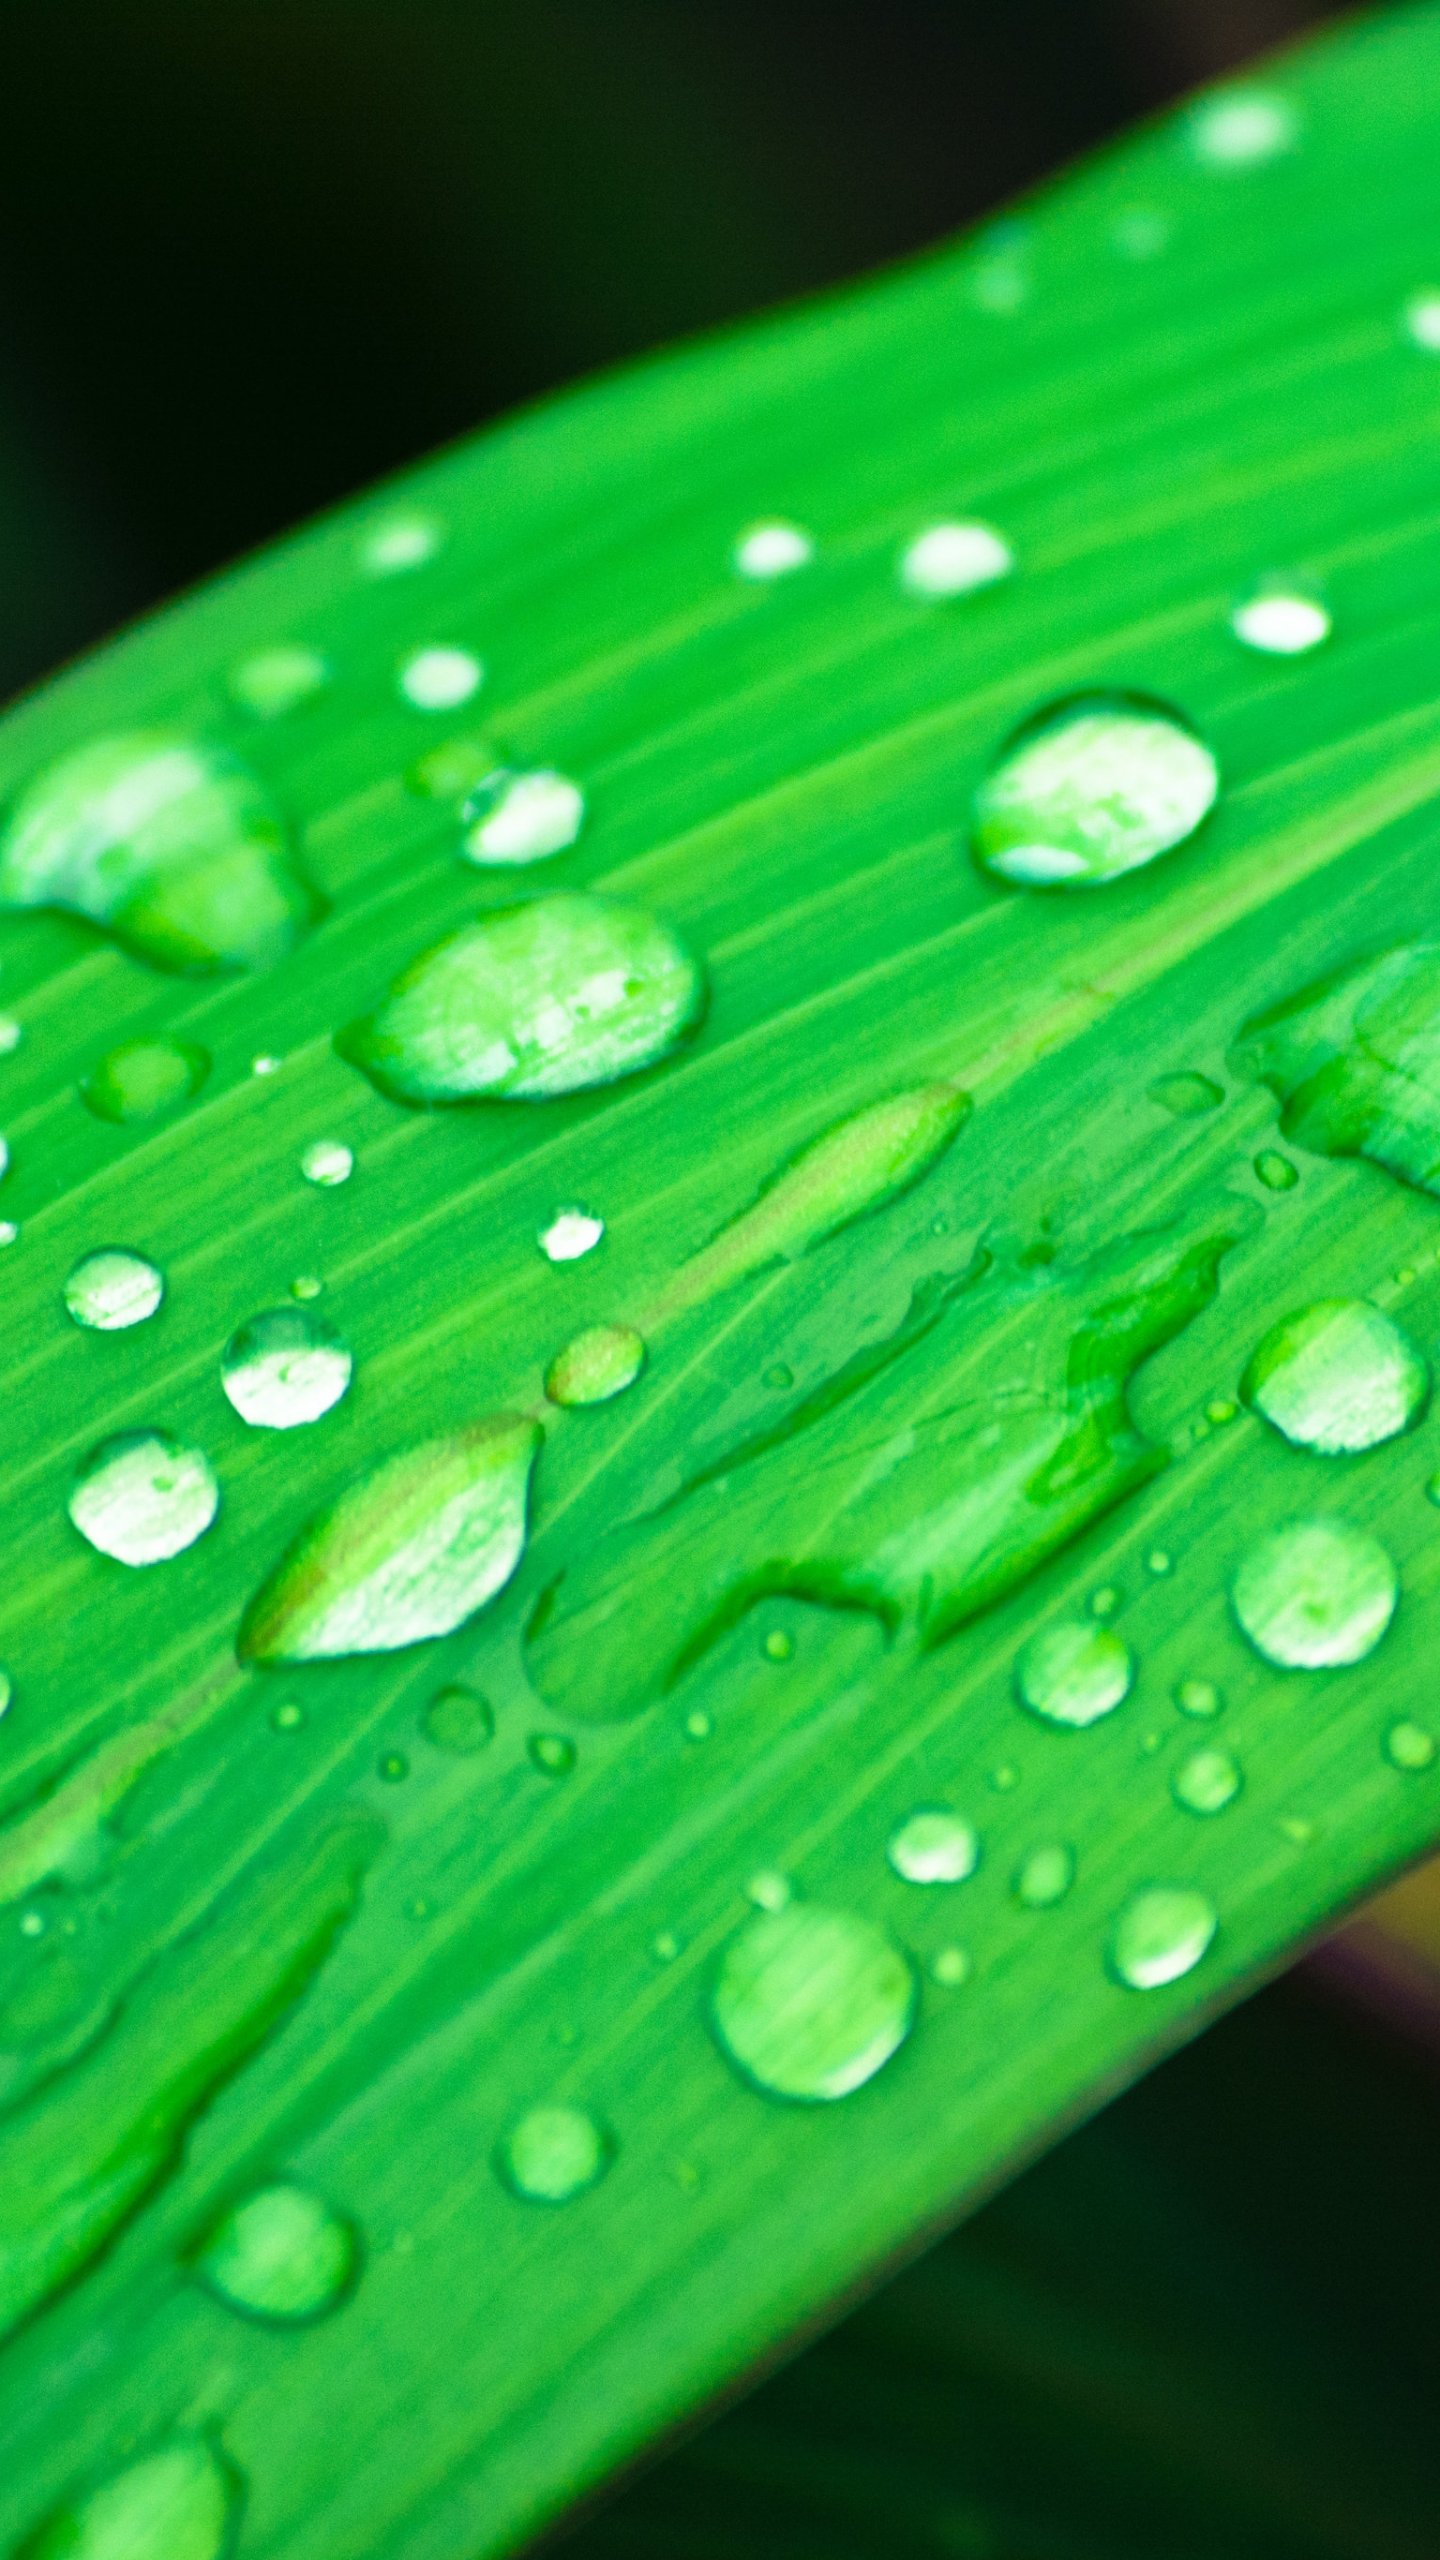 Grass In Rain - Water Droplets On Leaf , HD Wallpaper & Backgrounds